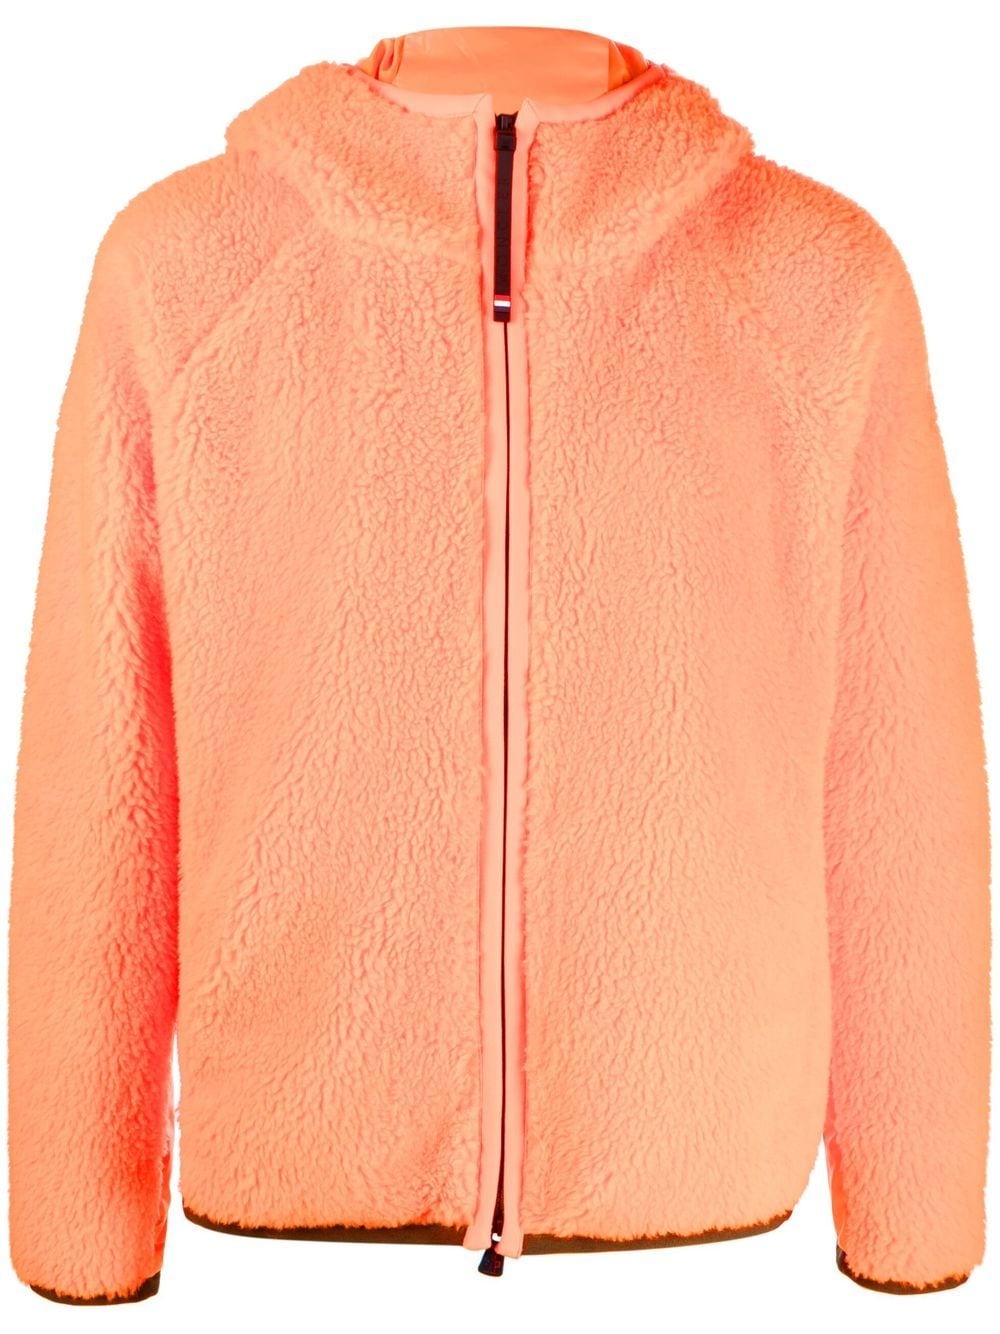 Moncler Grenoble zip-up hooded fleece jacket - Orange